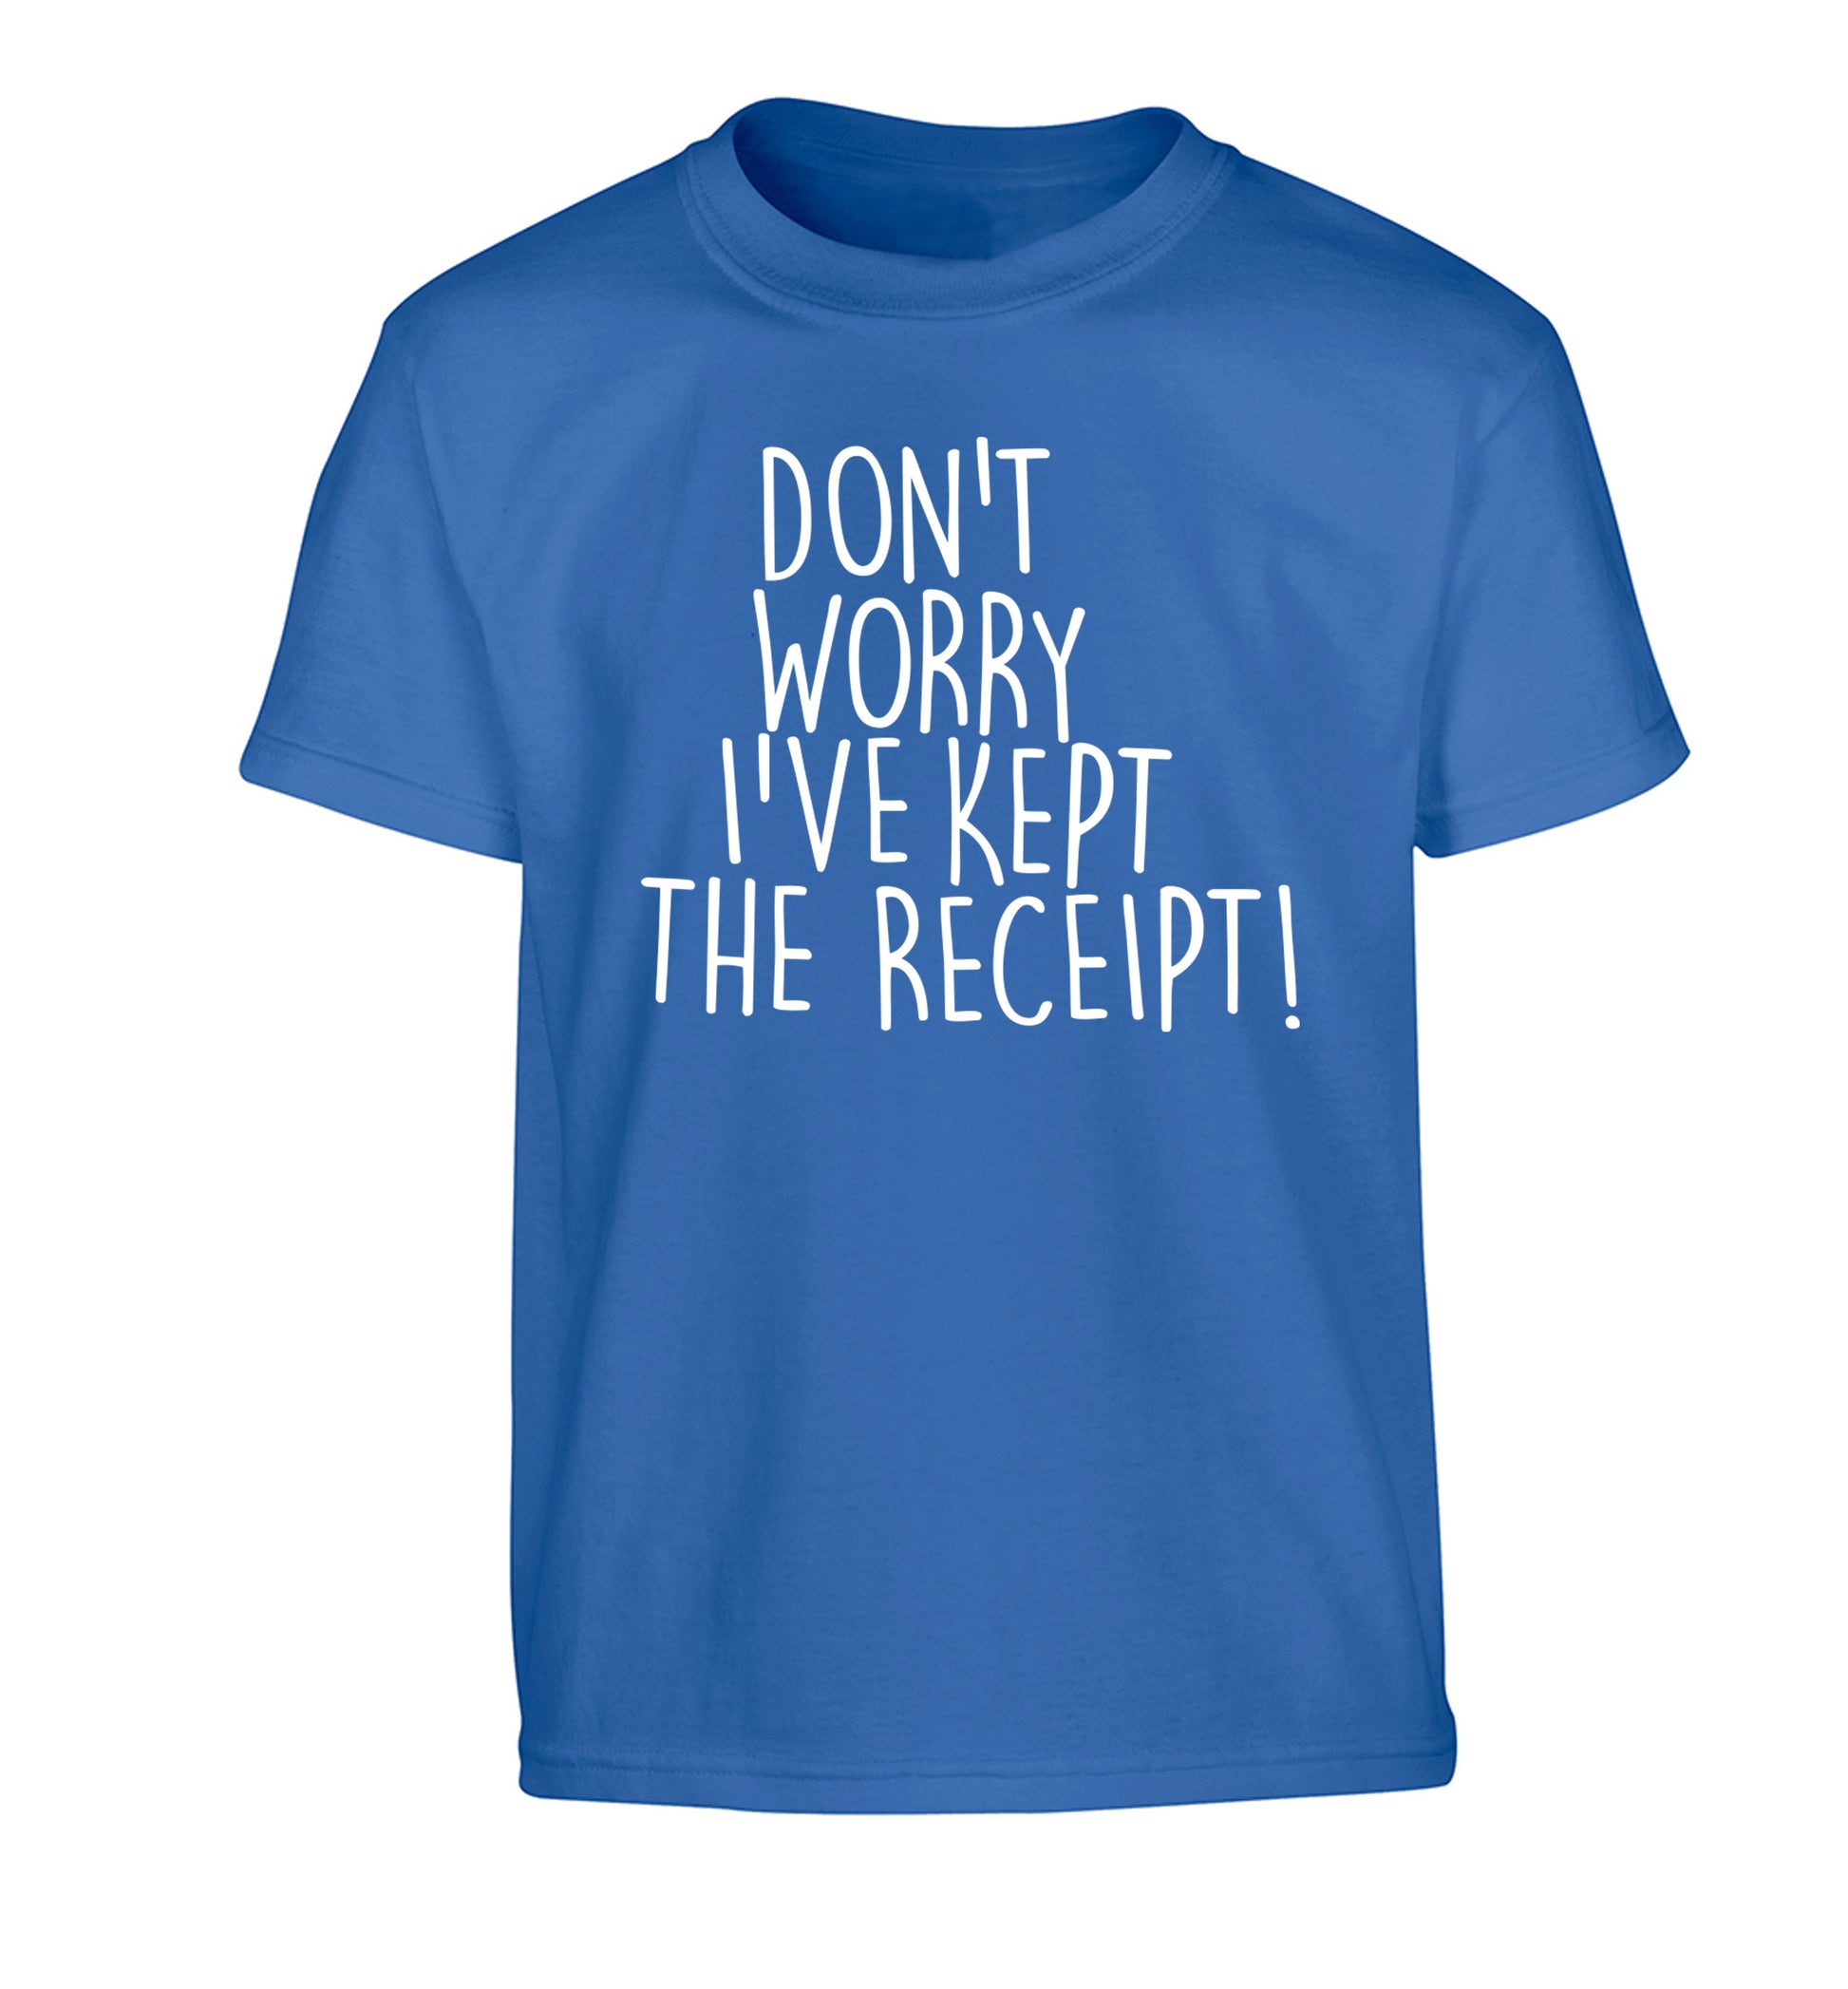 Don't Worry I've Kept the Receipt Children's blue Tshirt 12-13 Years